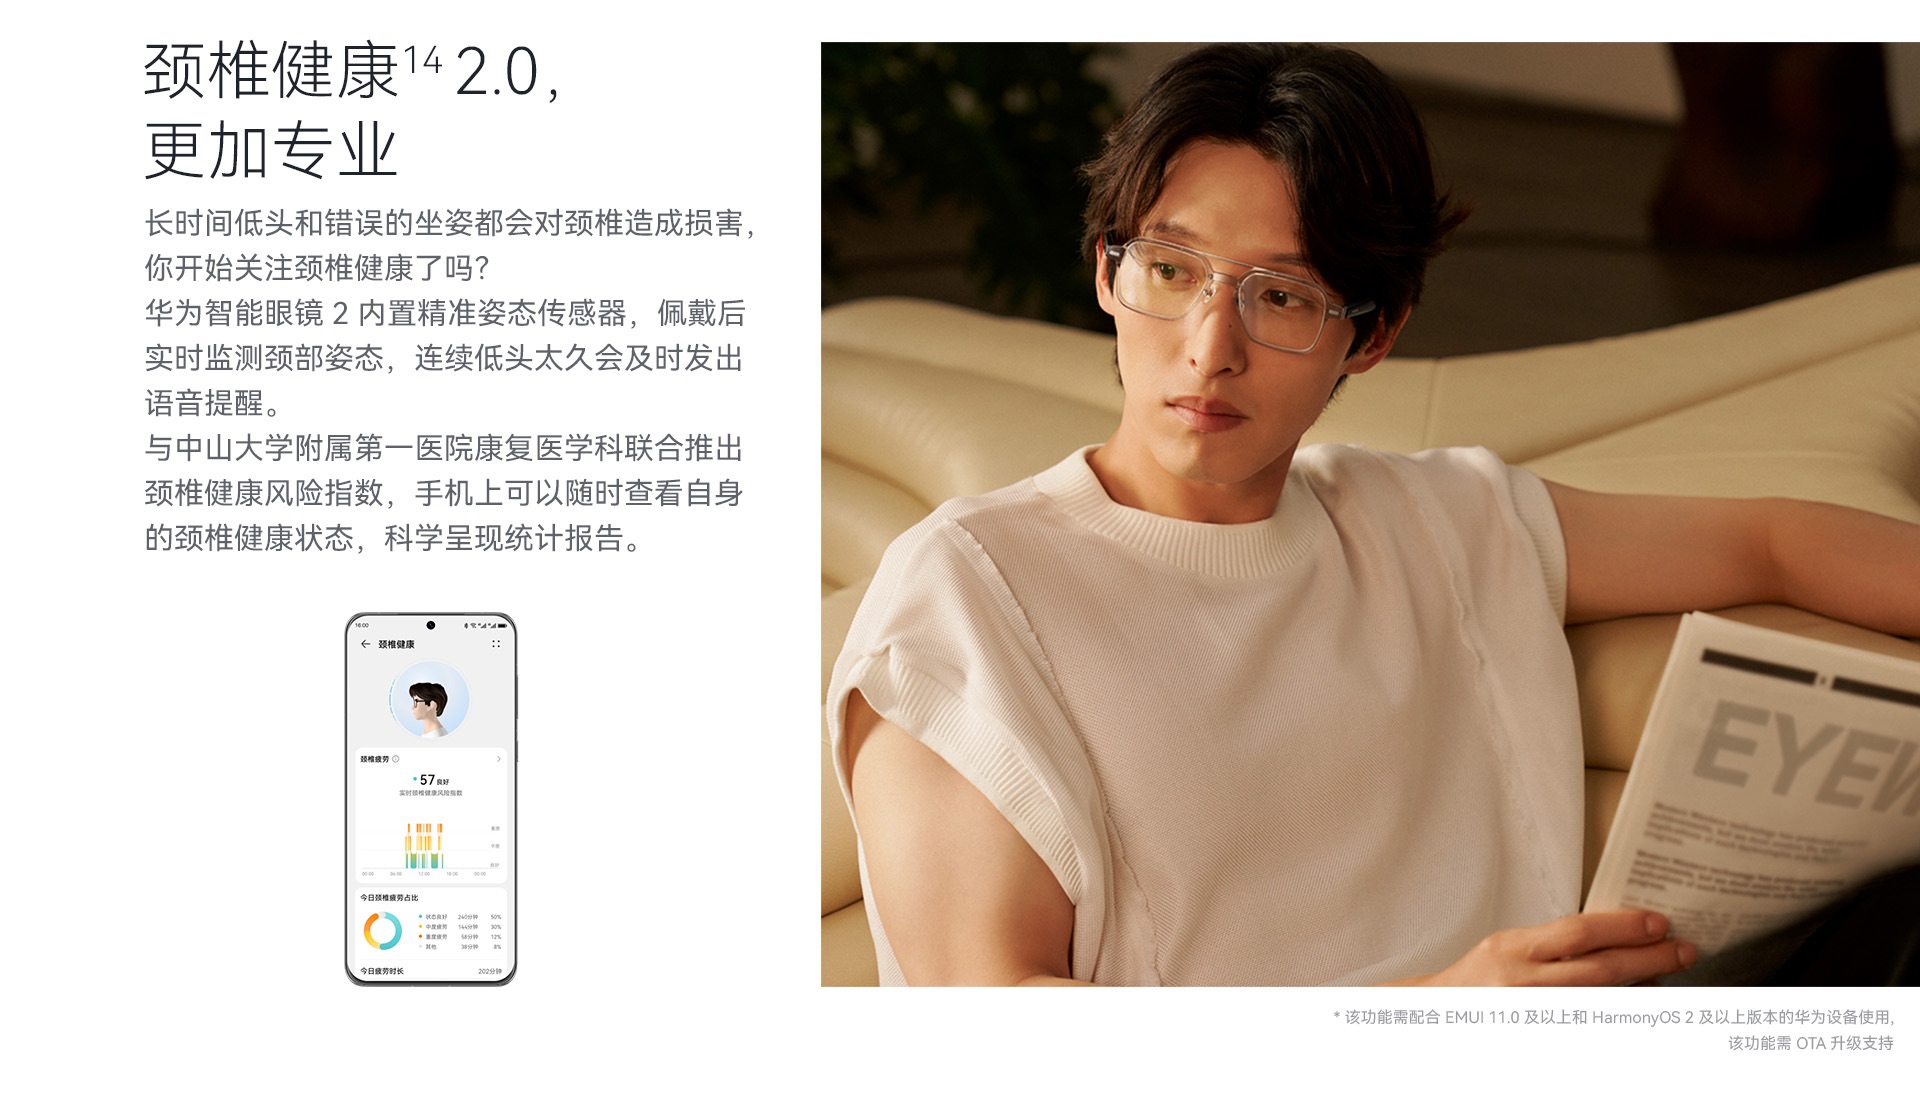 Huawei Eyewear 2 Smart Glasses